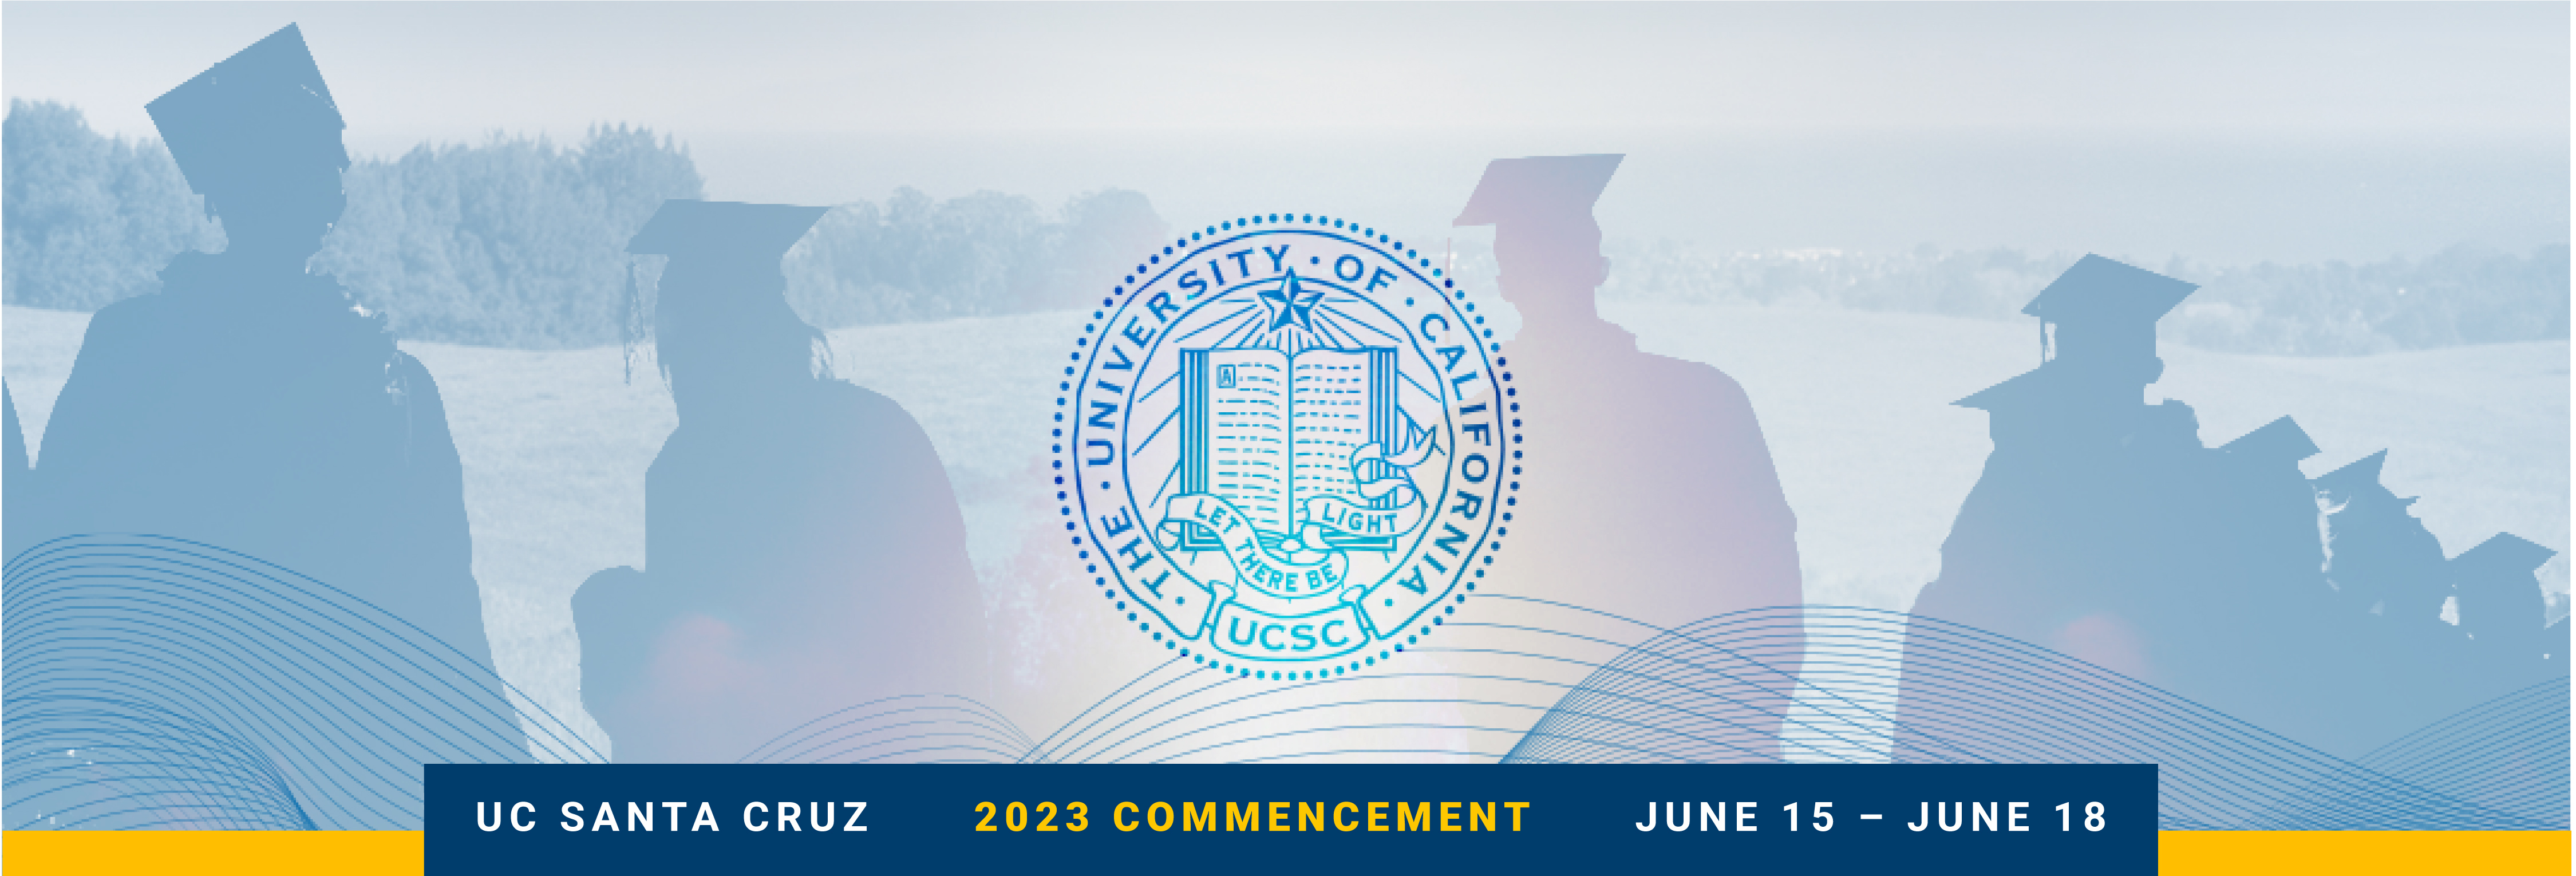 UC Santa Cruz Commencement June 15 - 18